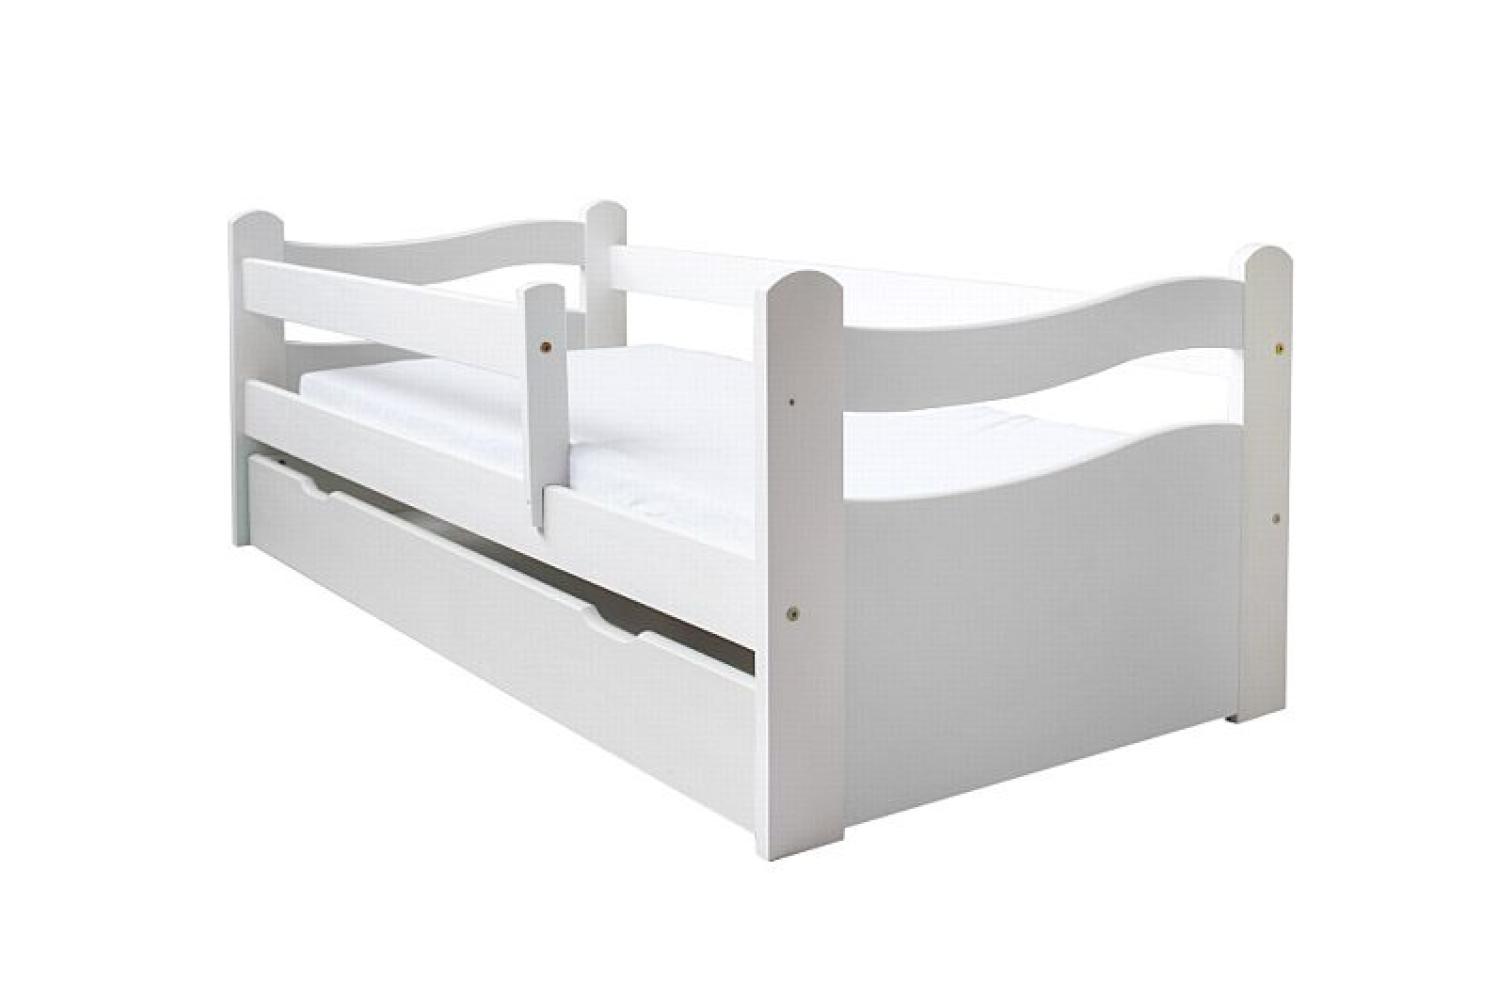 Kinderbettenwelt 'Abby' Kinderbett 80x160 cm, Weiß, inkl. Lattenrost, Matratze und Schublade Bild 1